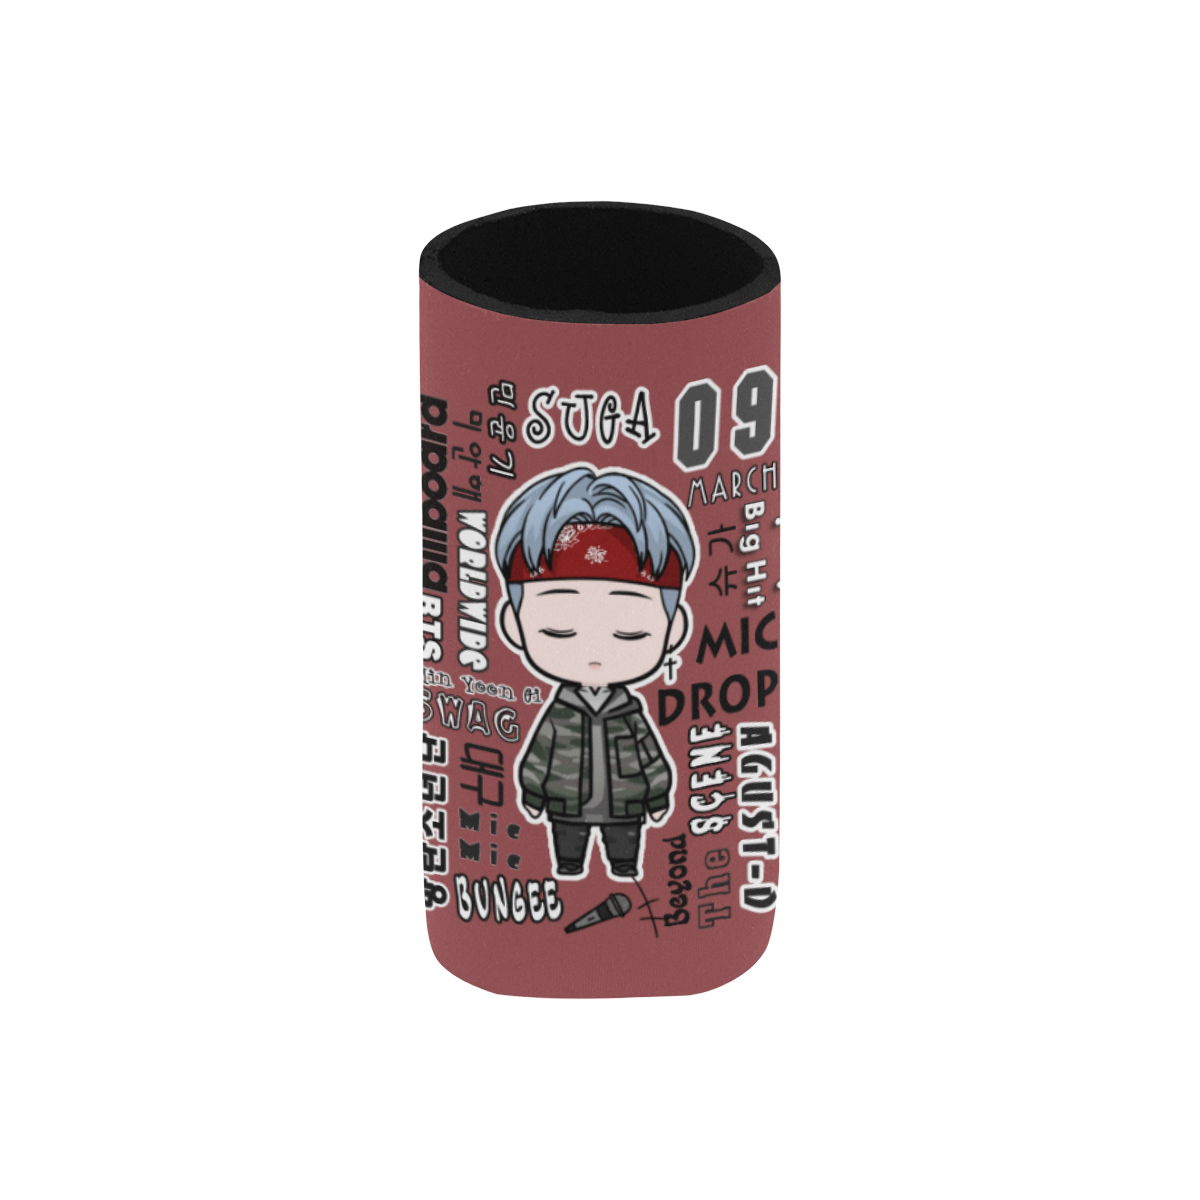 SUGA BTS - Mic drop chibi Neoprene Can Cooler 5" x 2.3" dia.